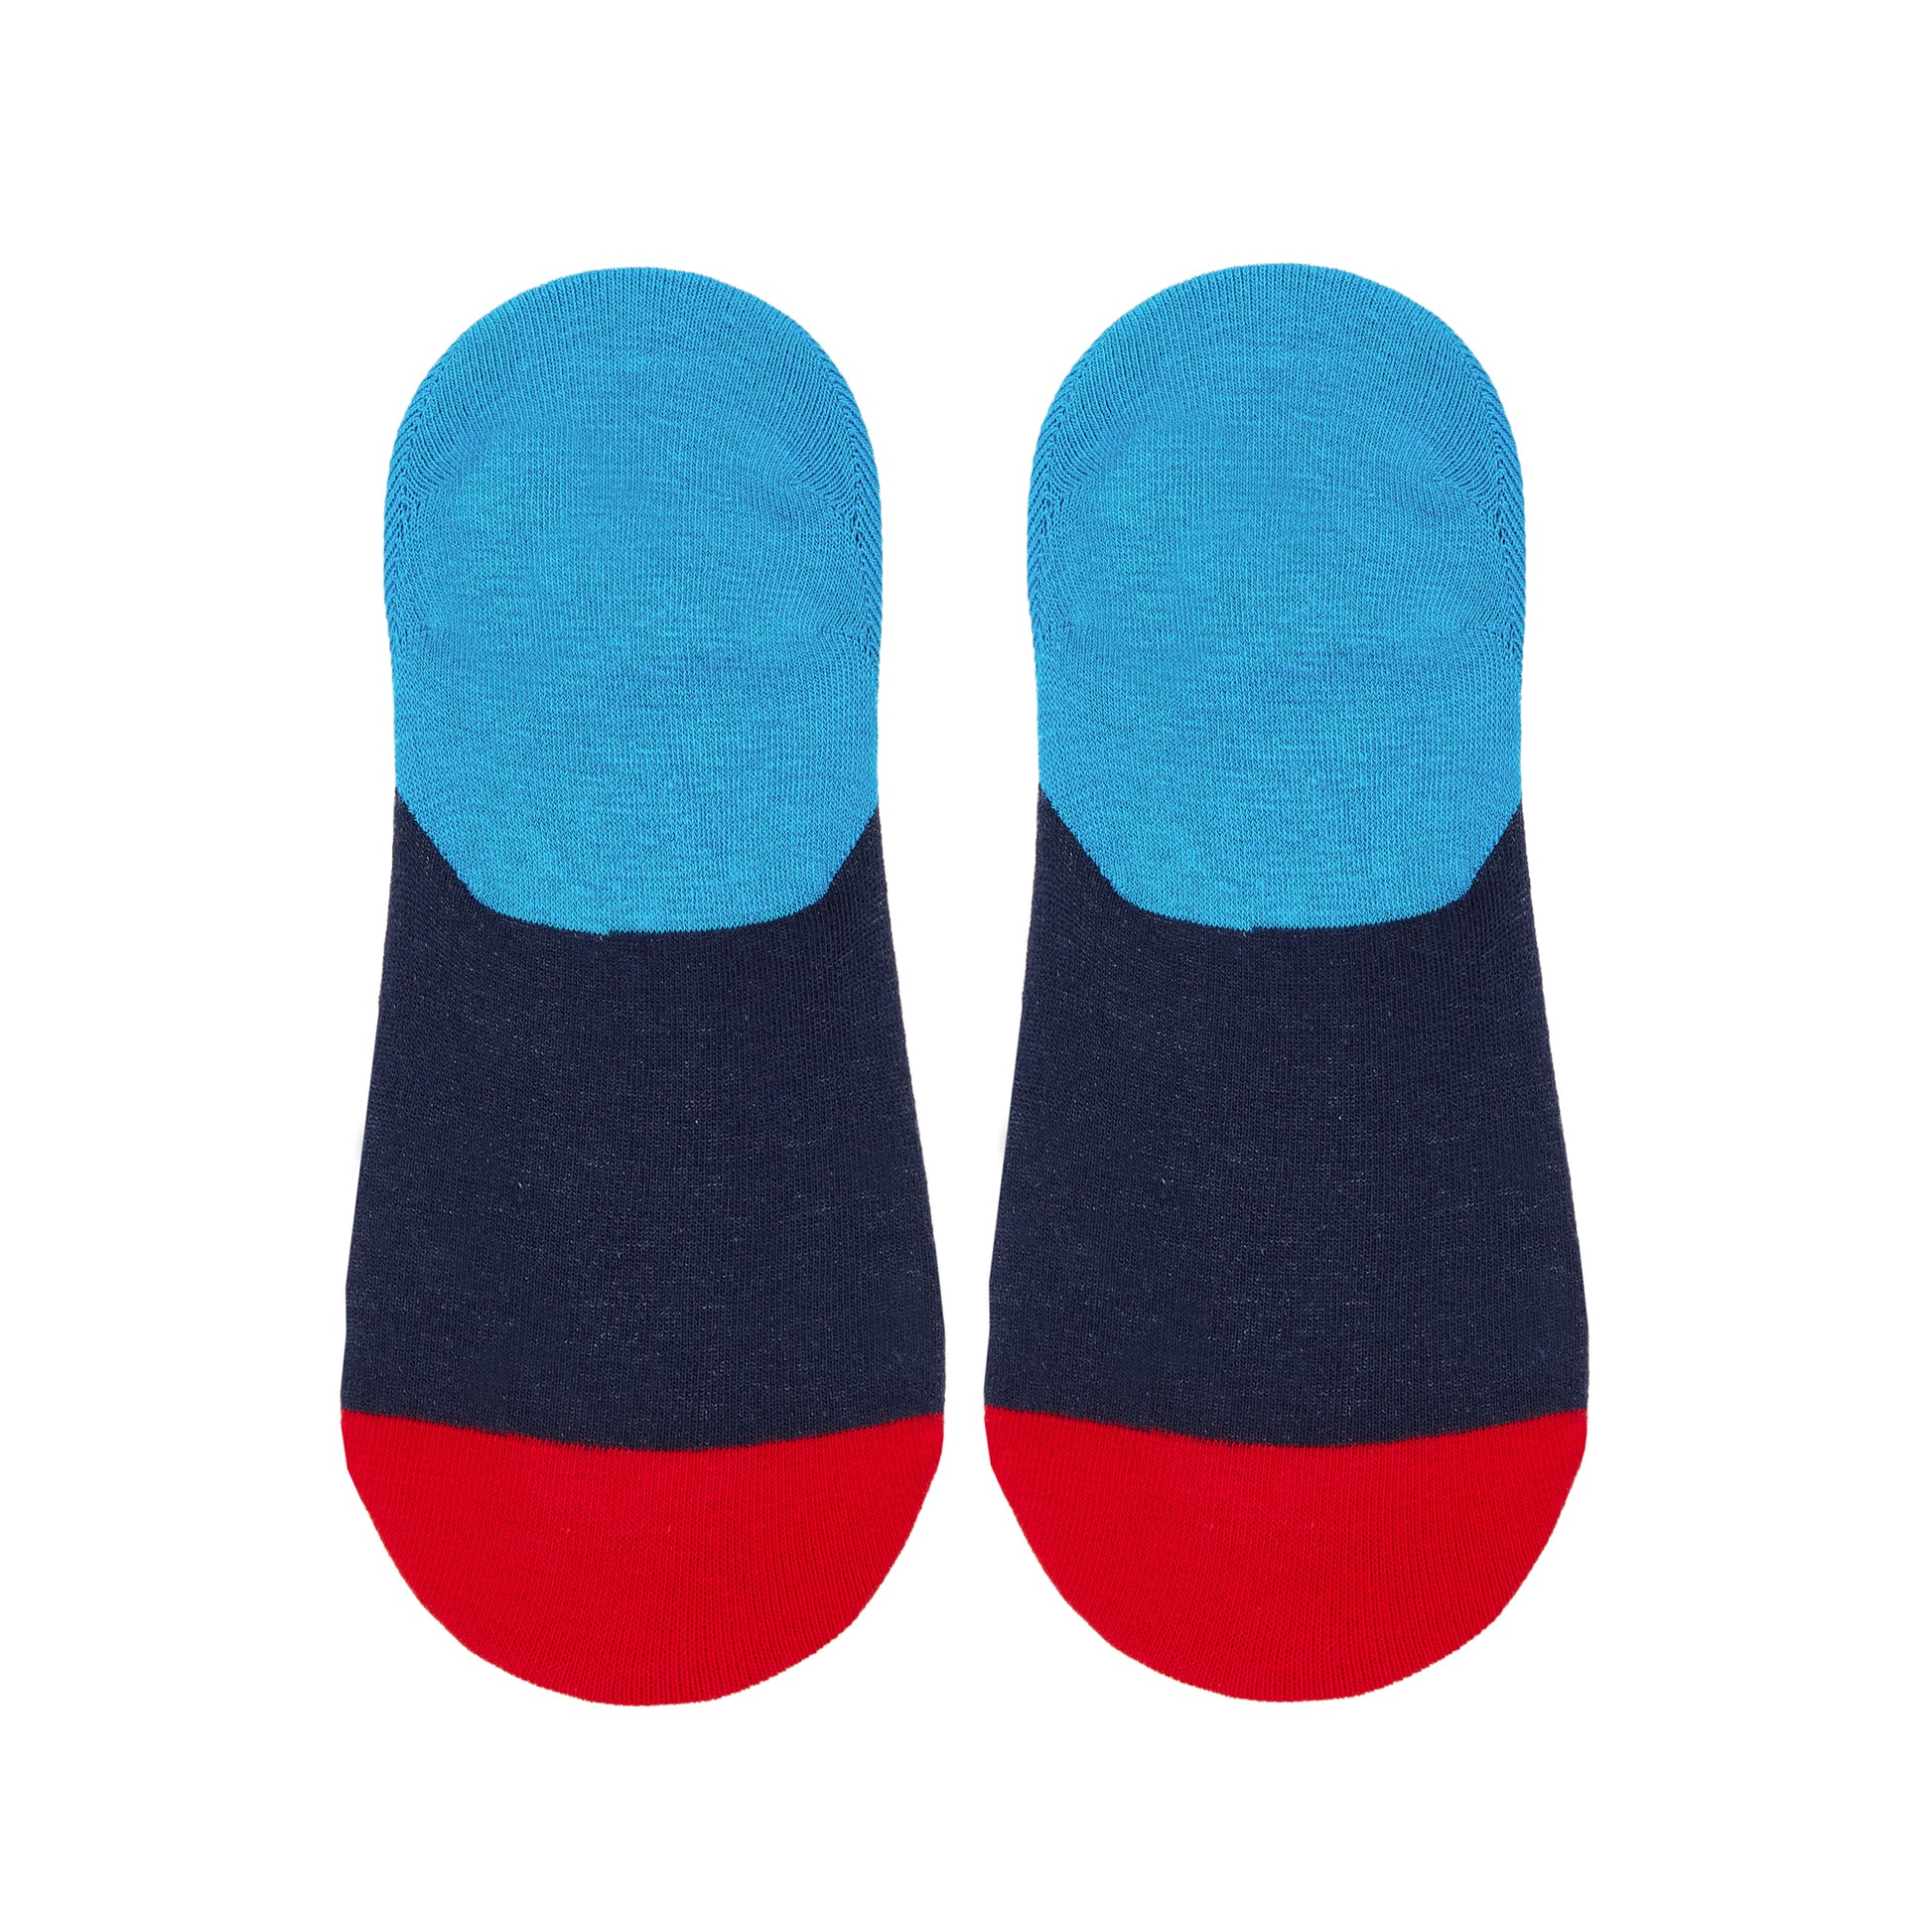 Mens Printed Invisible Socks - Prism - IDENTITY Apparel Shop